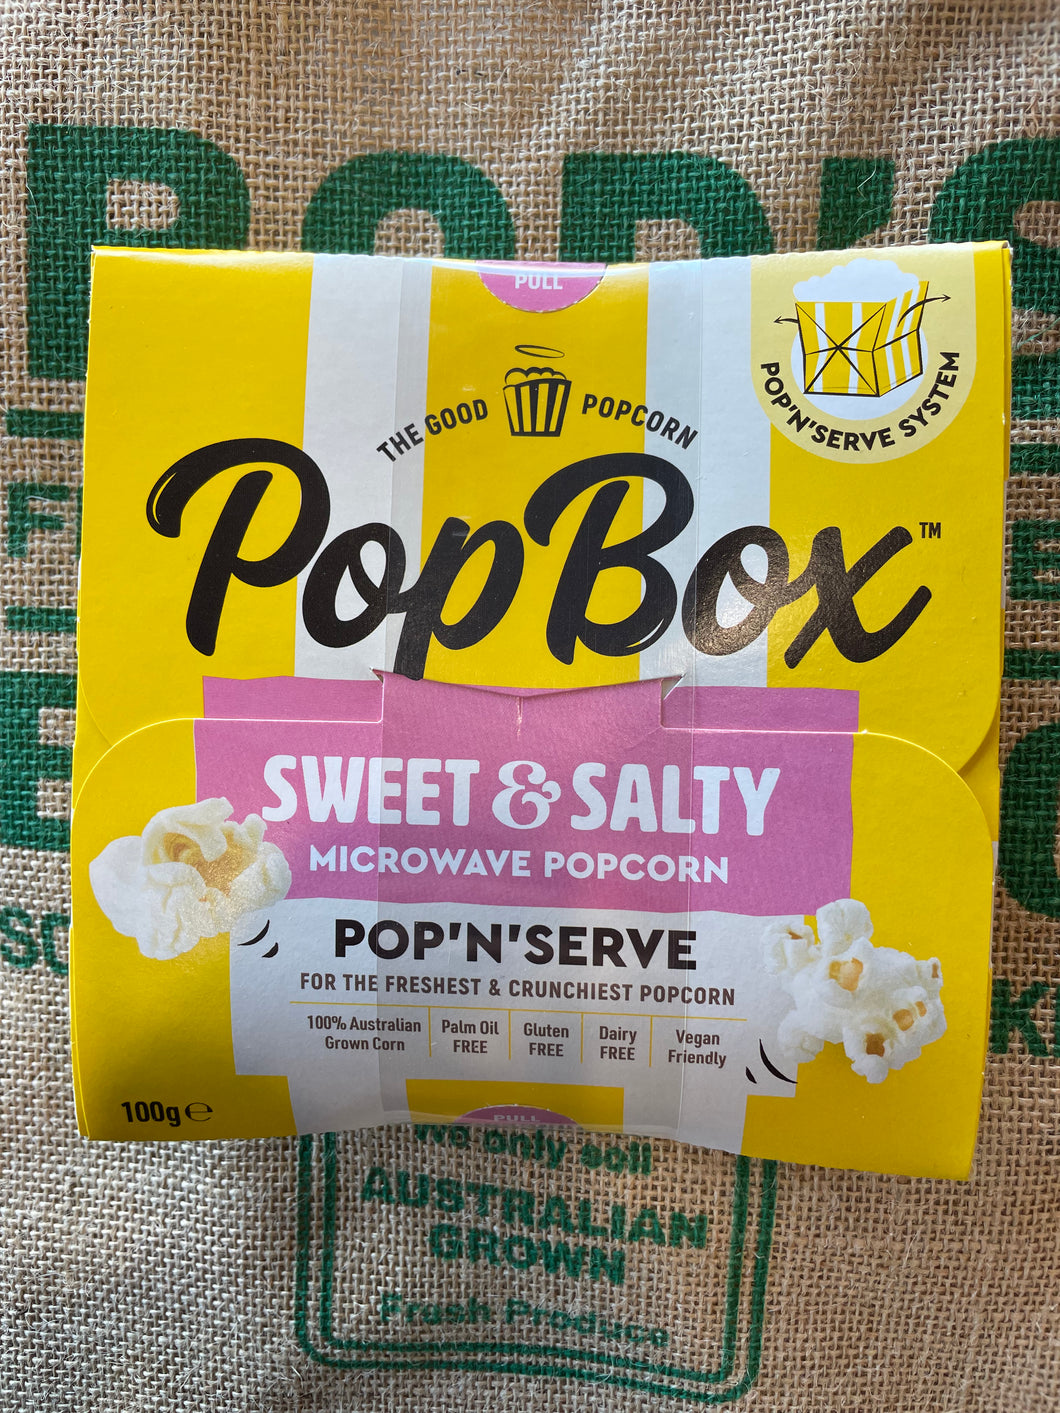 Popcorn - Pop Box Microwave Sweet & Salty Flavour